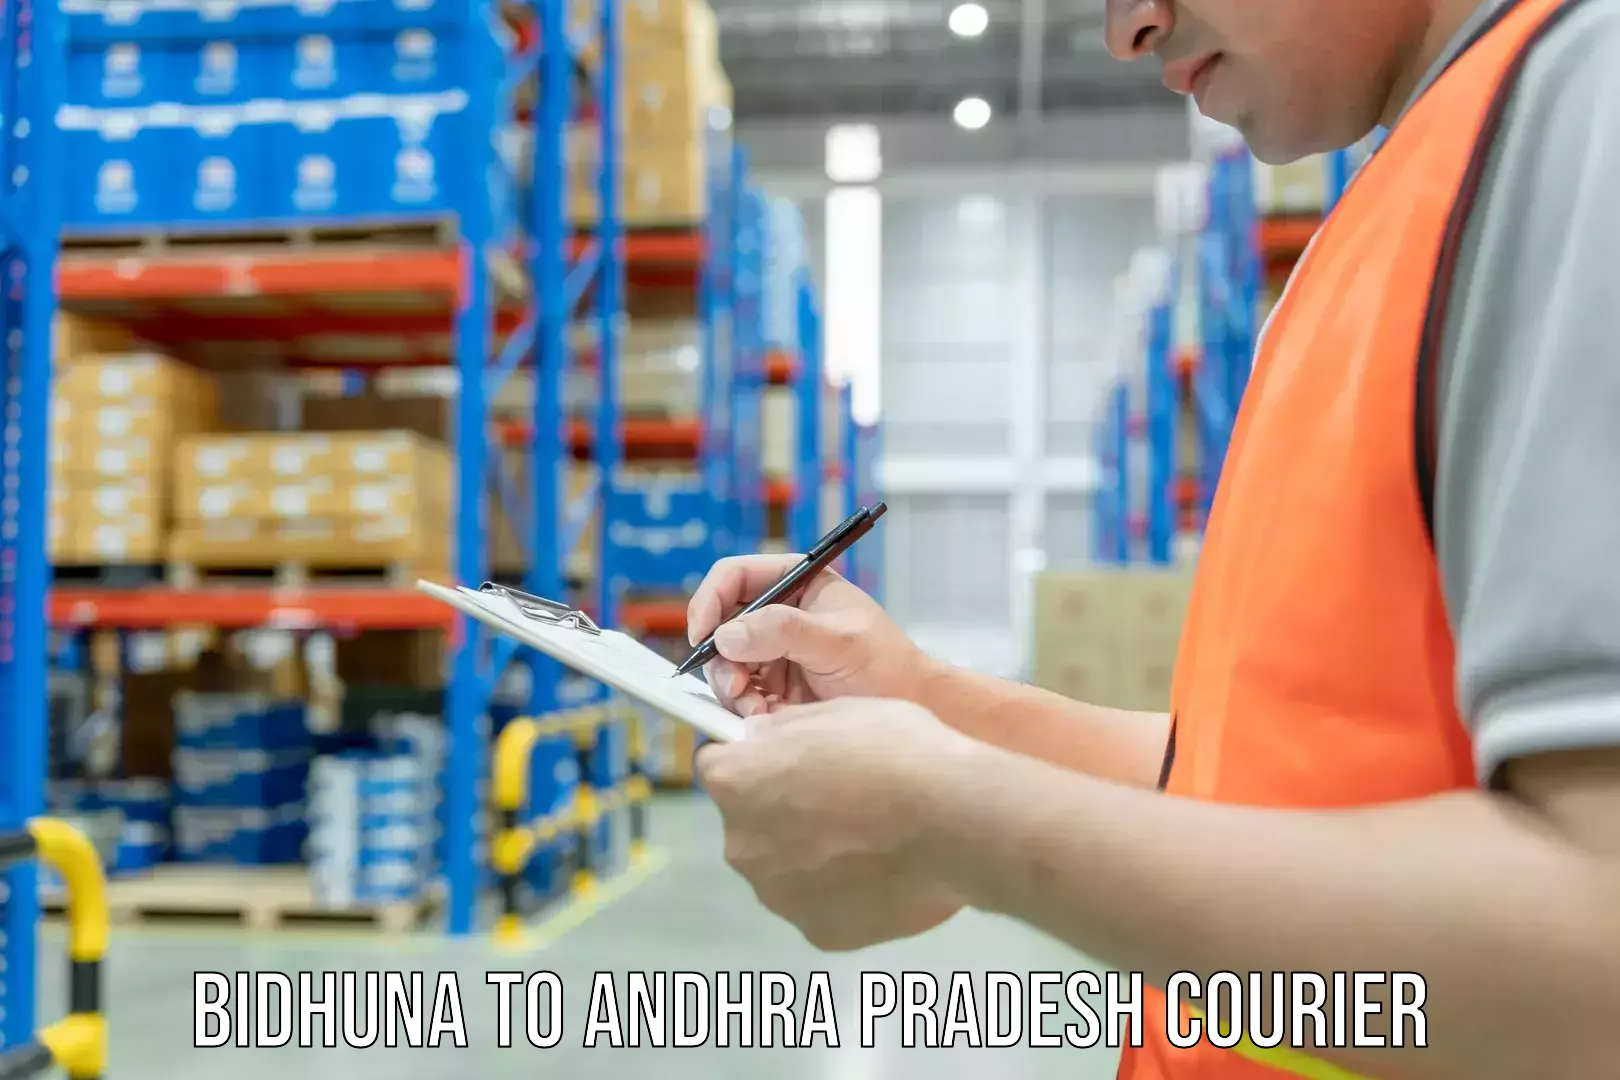 Global courier networks Bidhuna to Andhra Pradesh